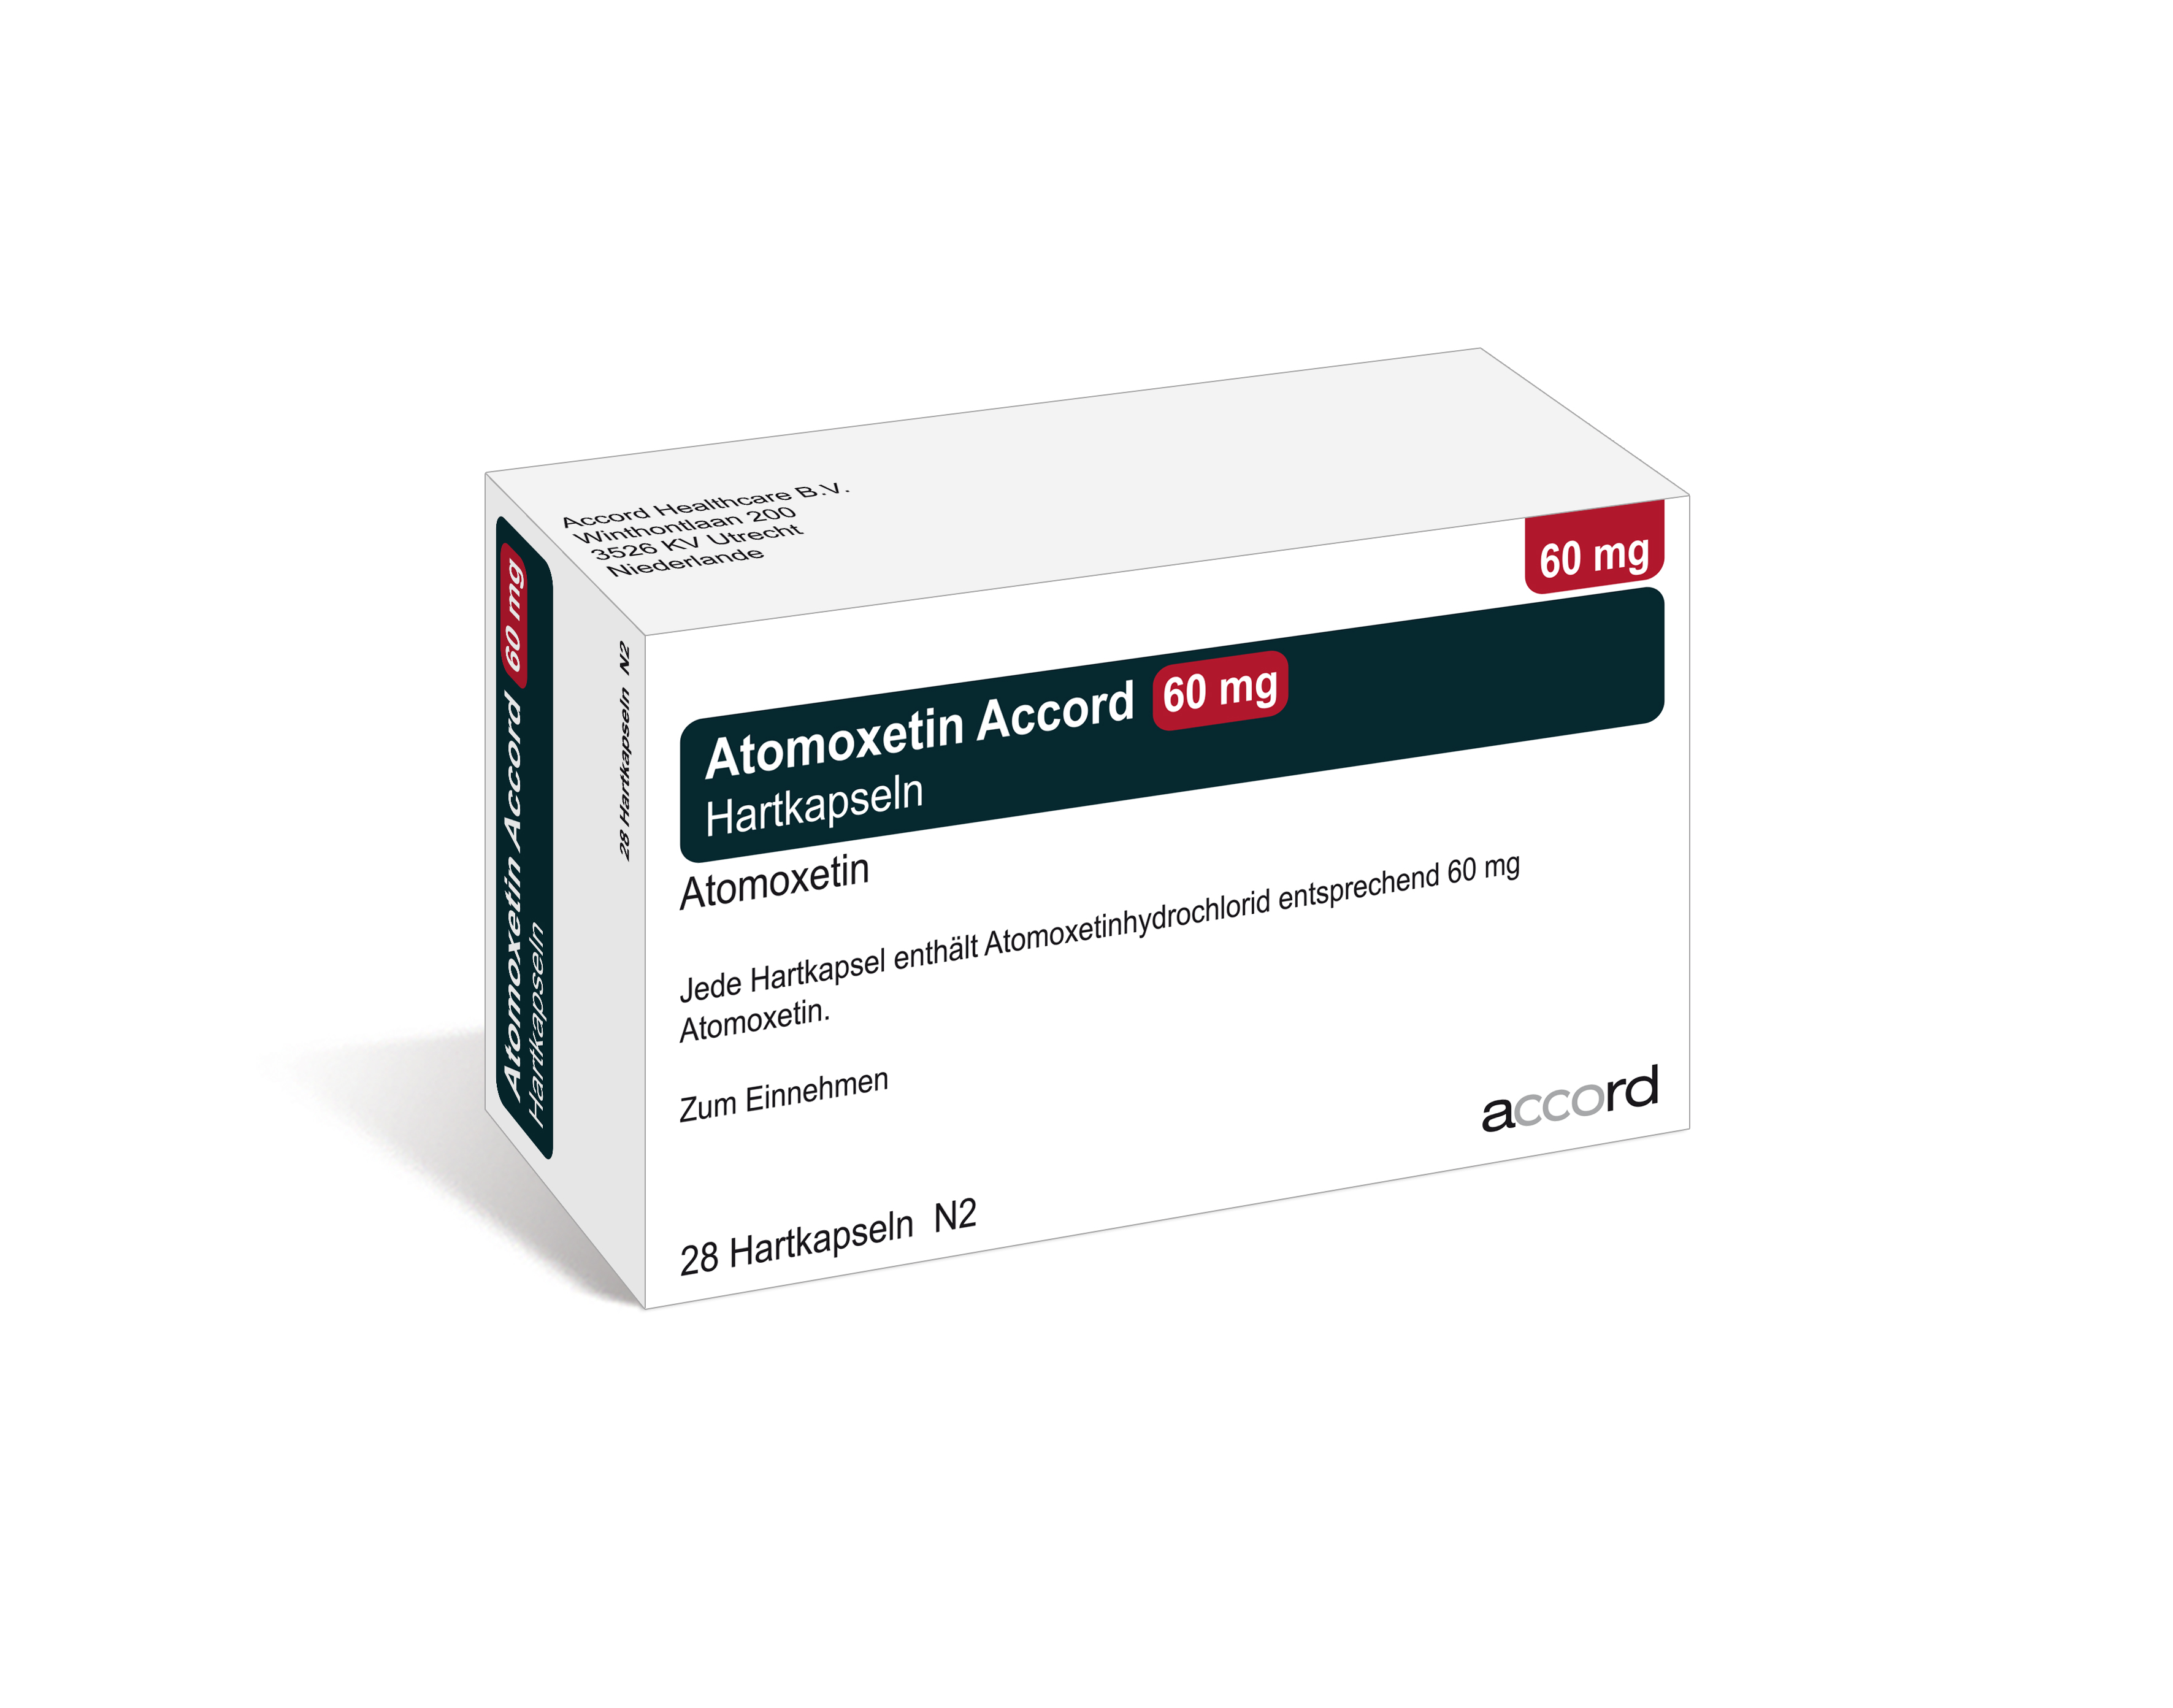 Accord Packshot Atomoxetin 60 mg